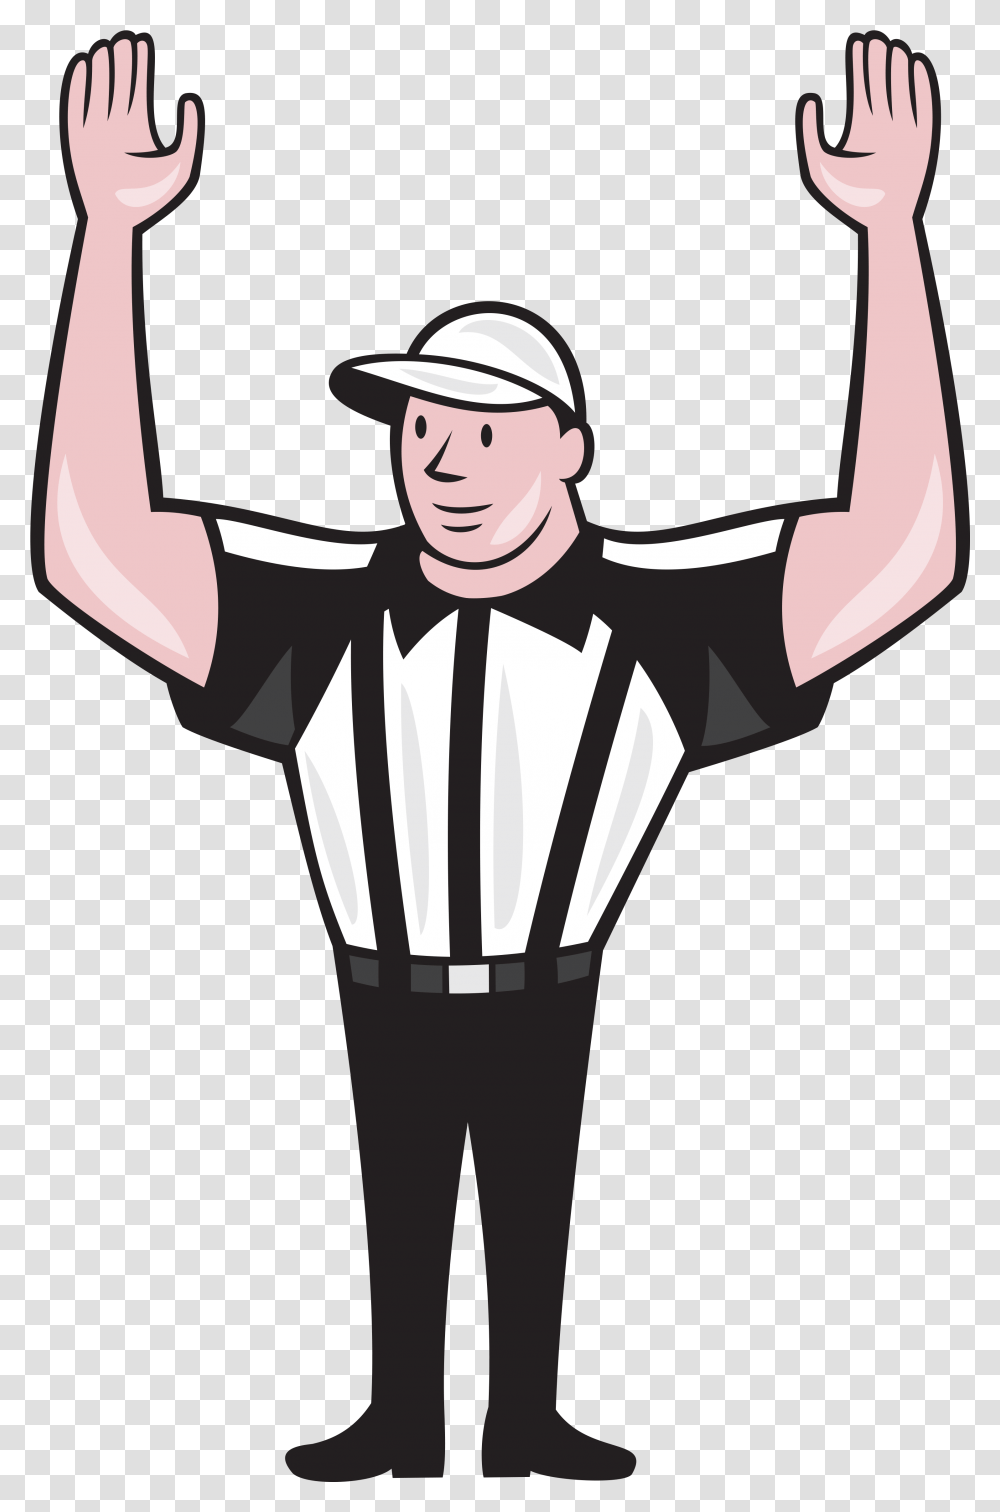 Football Referee 7 Image Cartoon Referee, Performer, Person, Human, Magician Transparent Png